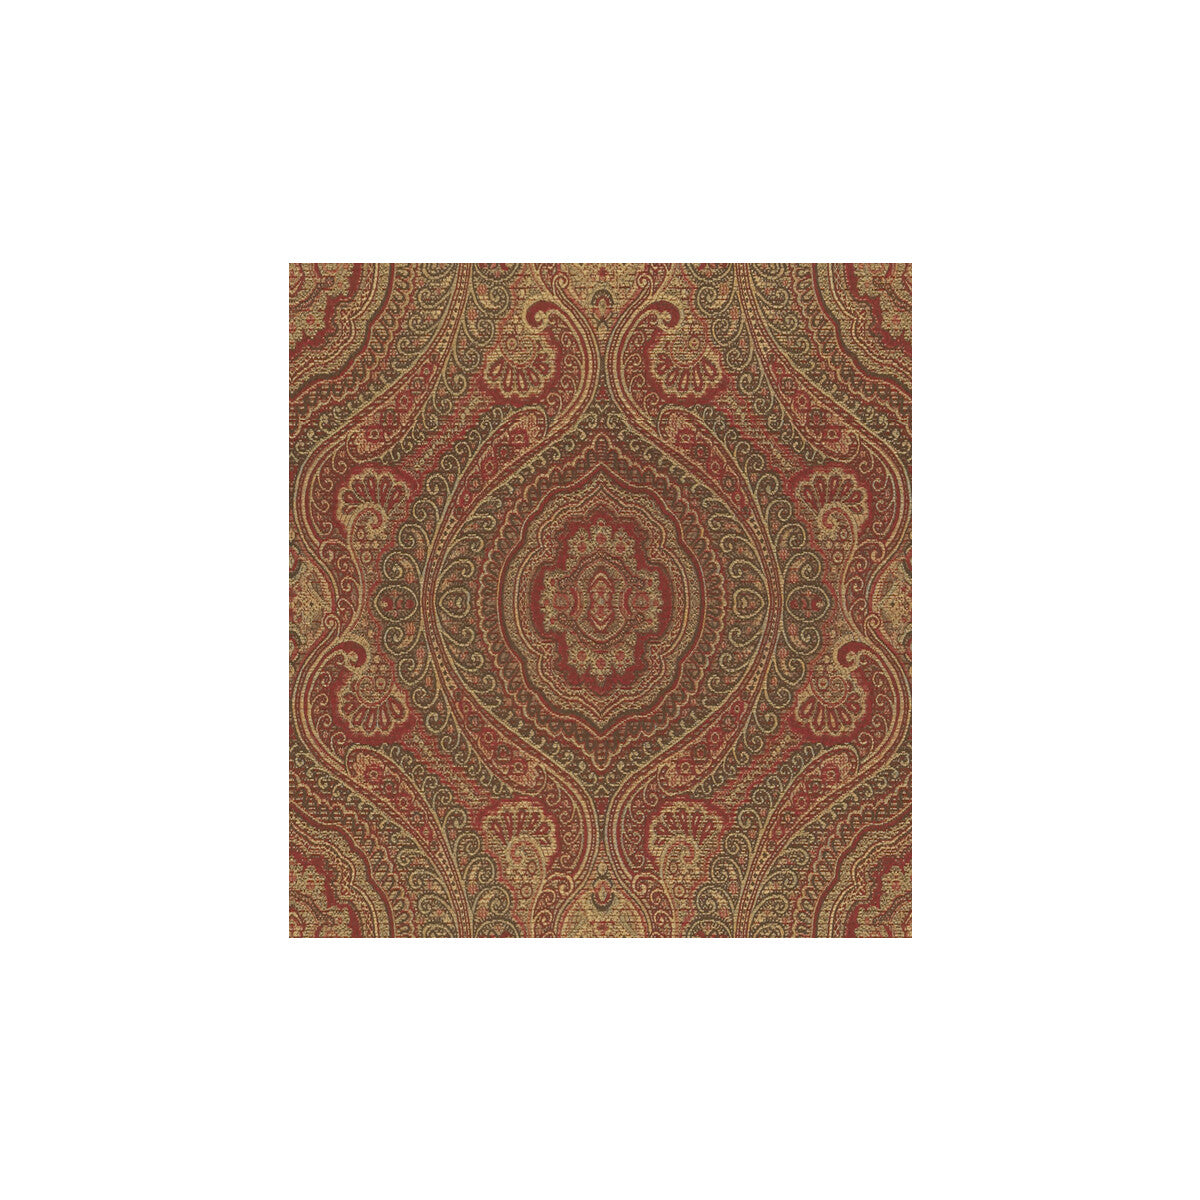 Kravet Design fabric in 31420-19 color - pattern 31420.19.0 - by Kravet Design in the Gis collection